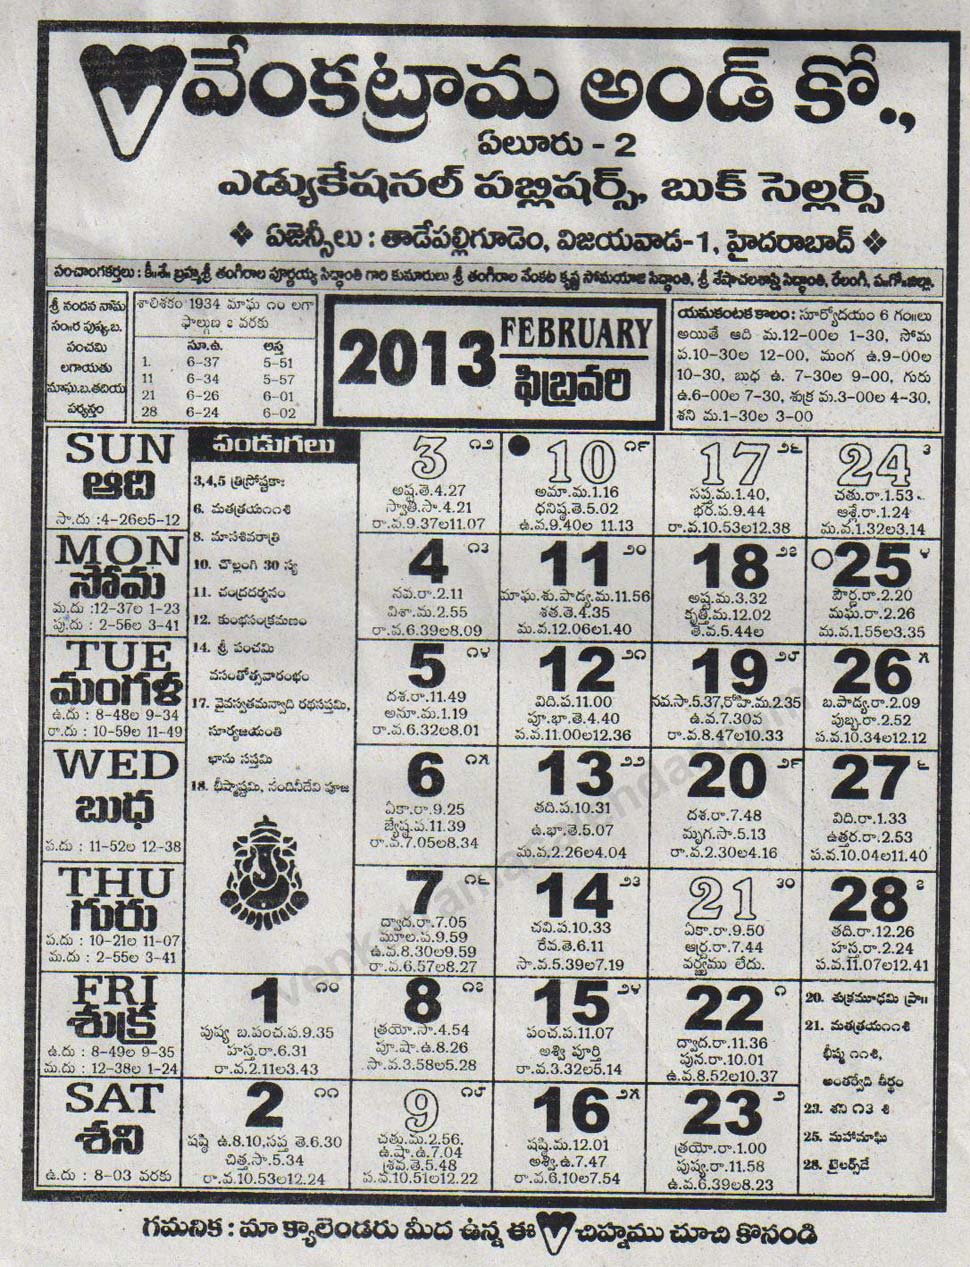 Venkatrama Co Telugu Calendar 2013 February - Venkatrama Telugu